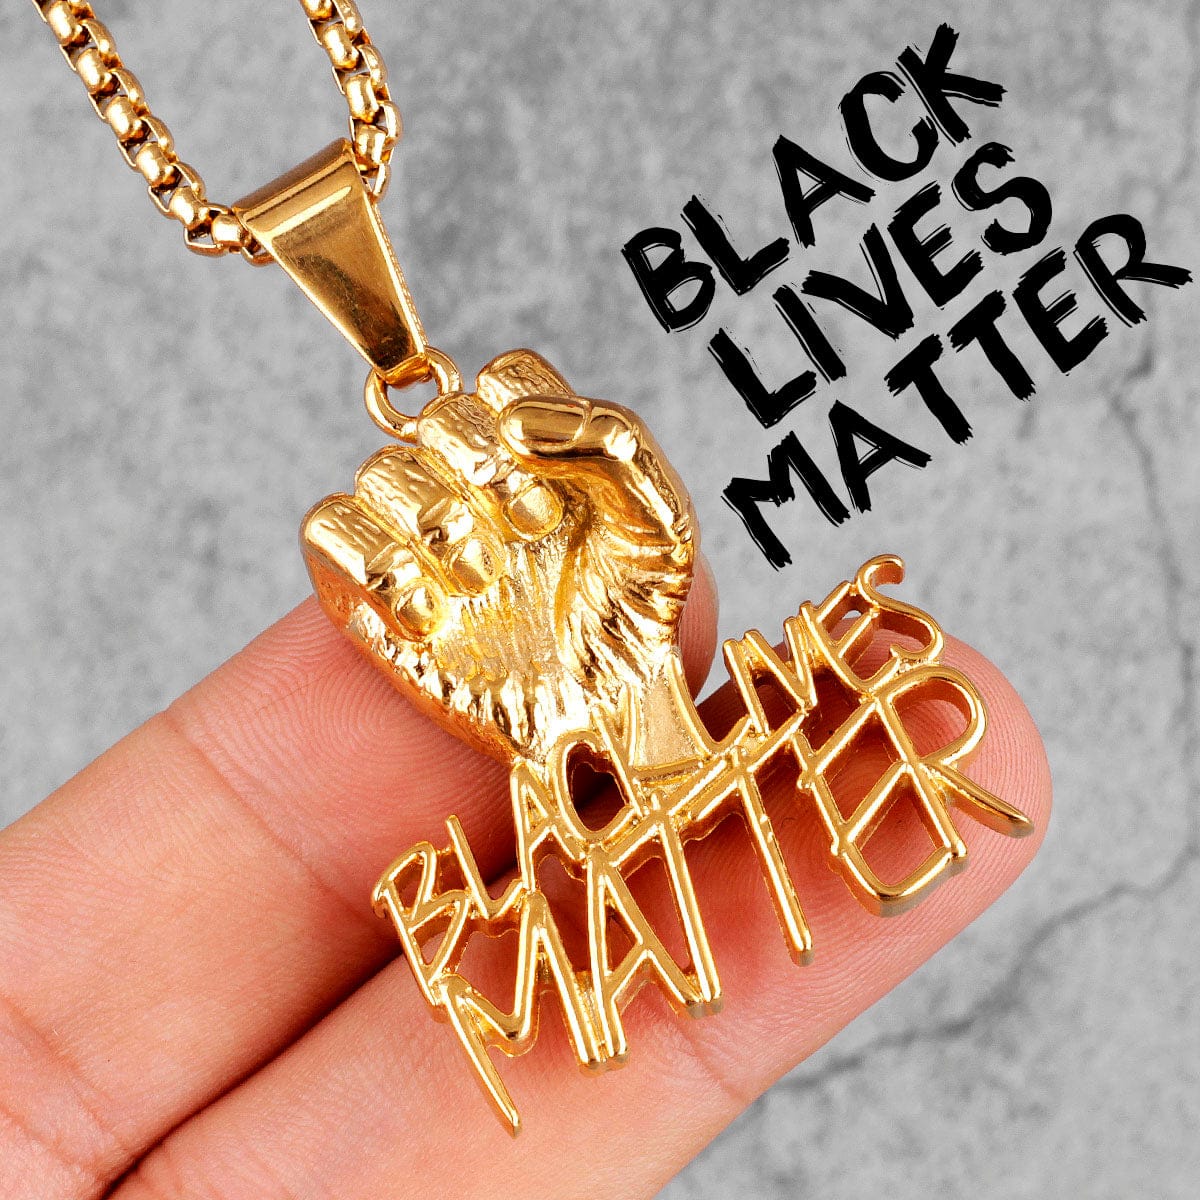 VVS Jewelry hip hop jewelry Black Lives Matter Fist Gold Pendant Necklace